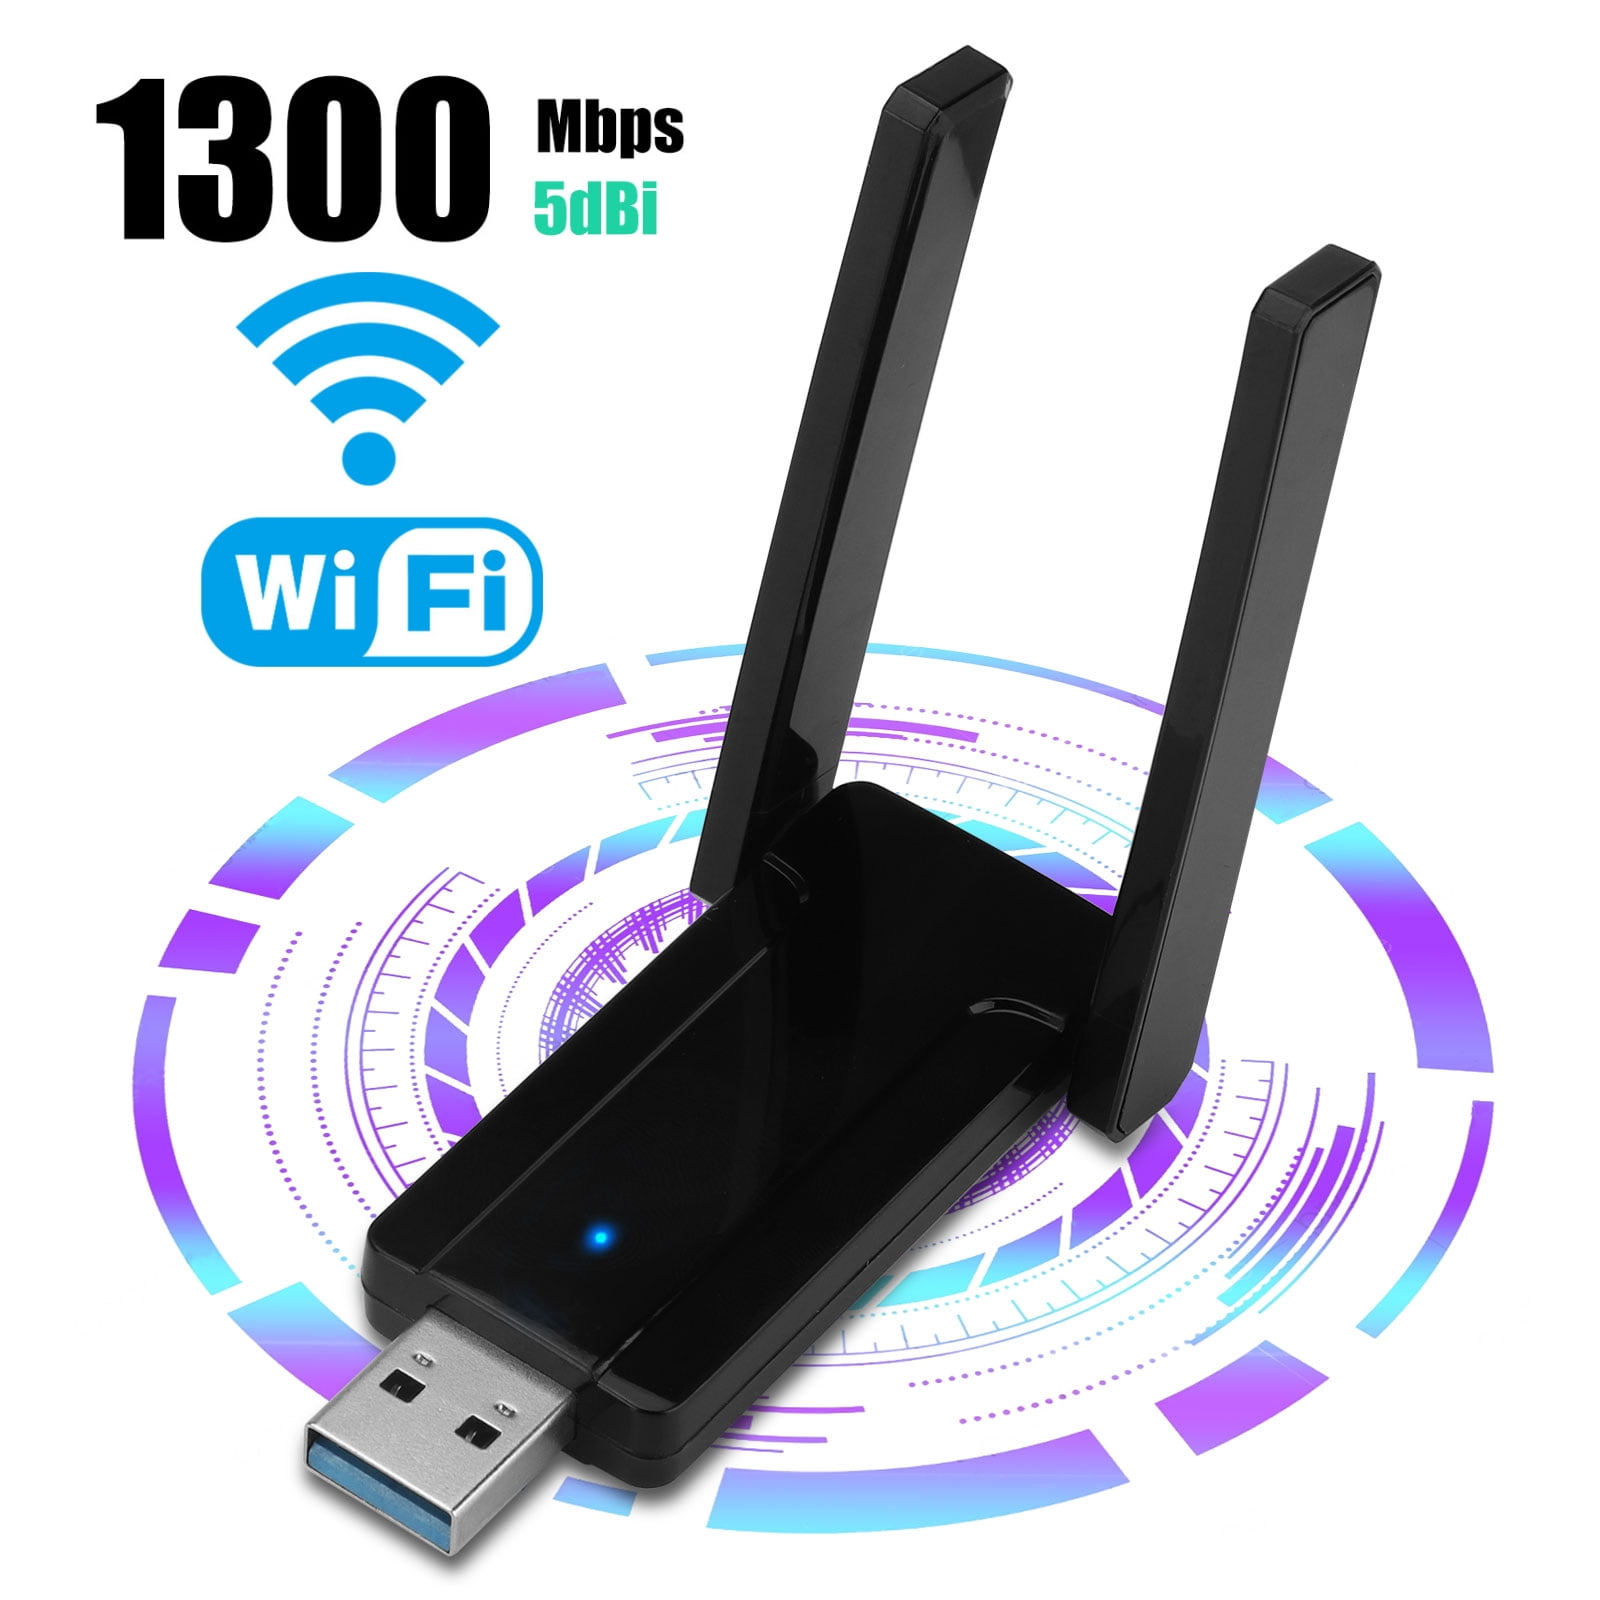 USB WiFi Adapter for PC, AC 1300Mbps USB 3.0 Wireless Network Adapter with 2*5dBi Dual Band 2.4G/5GHz High Gain Antennas for Laptop Desktop Windows 10//8/7/XP/Vista, Linux, Mac OS 10.9-10.15 - Walmart.com